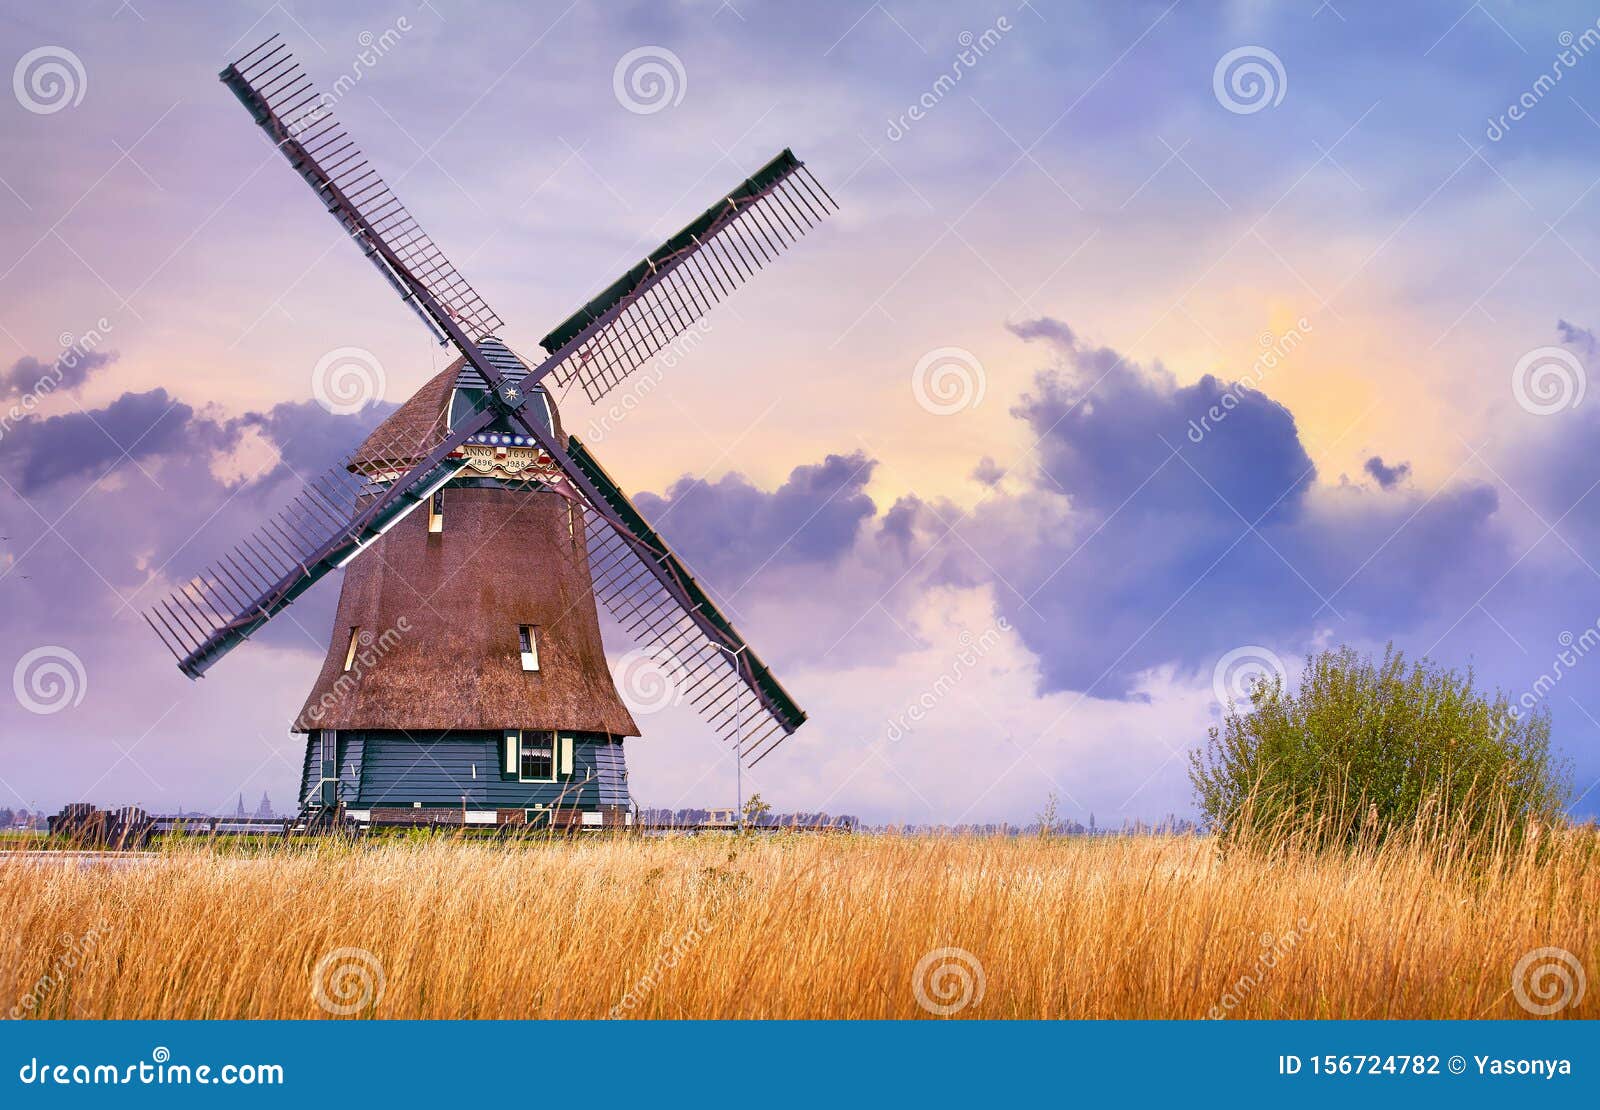 volendam, netherlands. traditional holland windmill